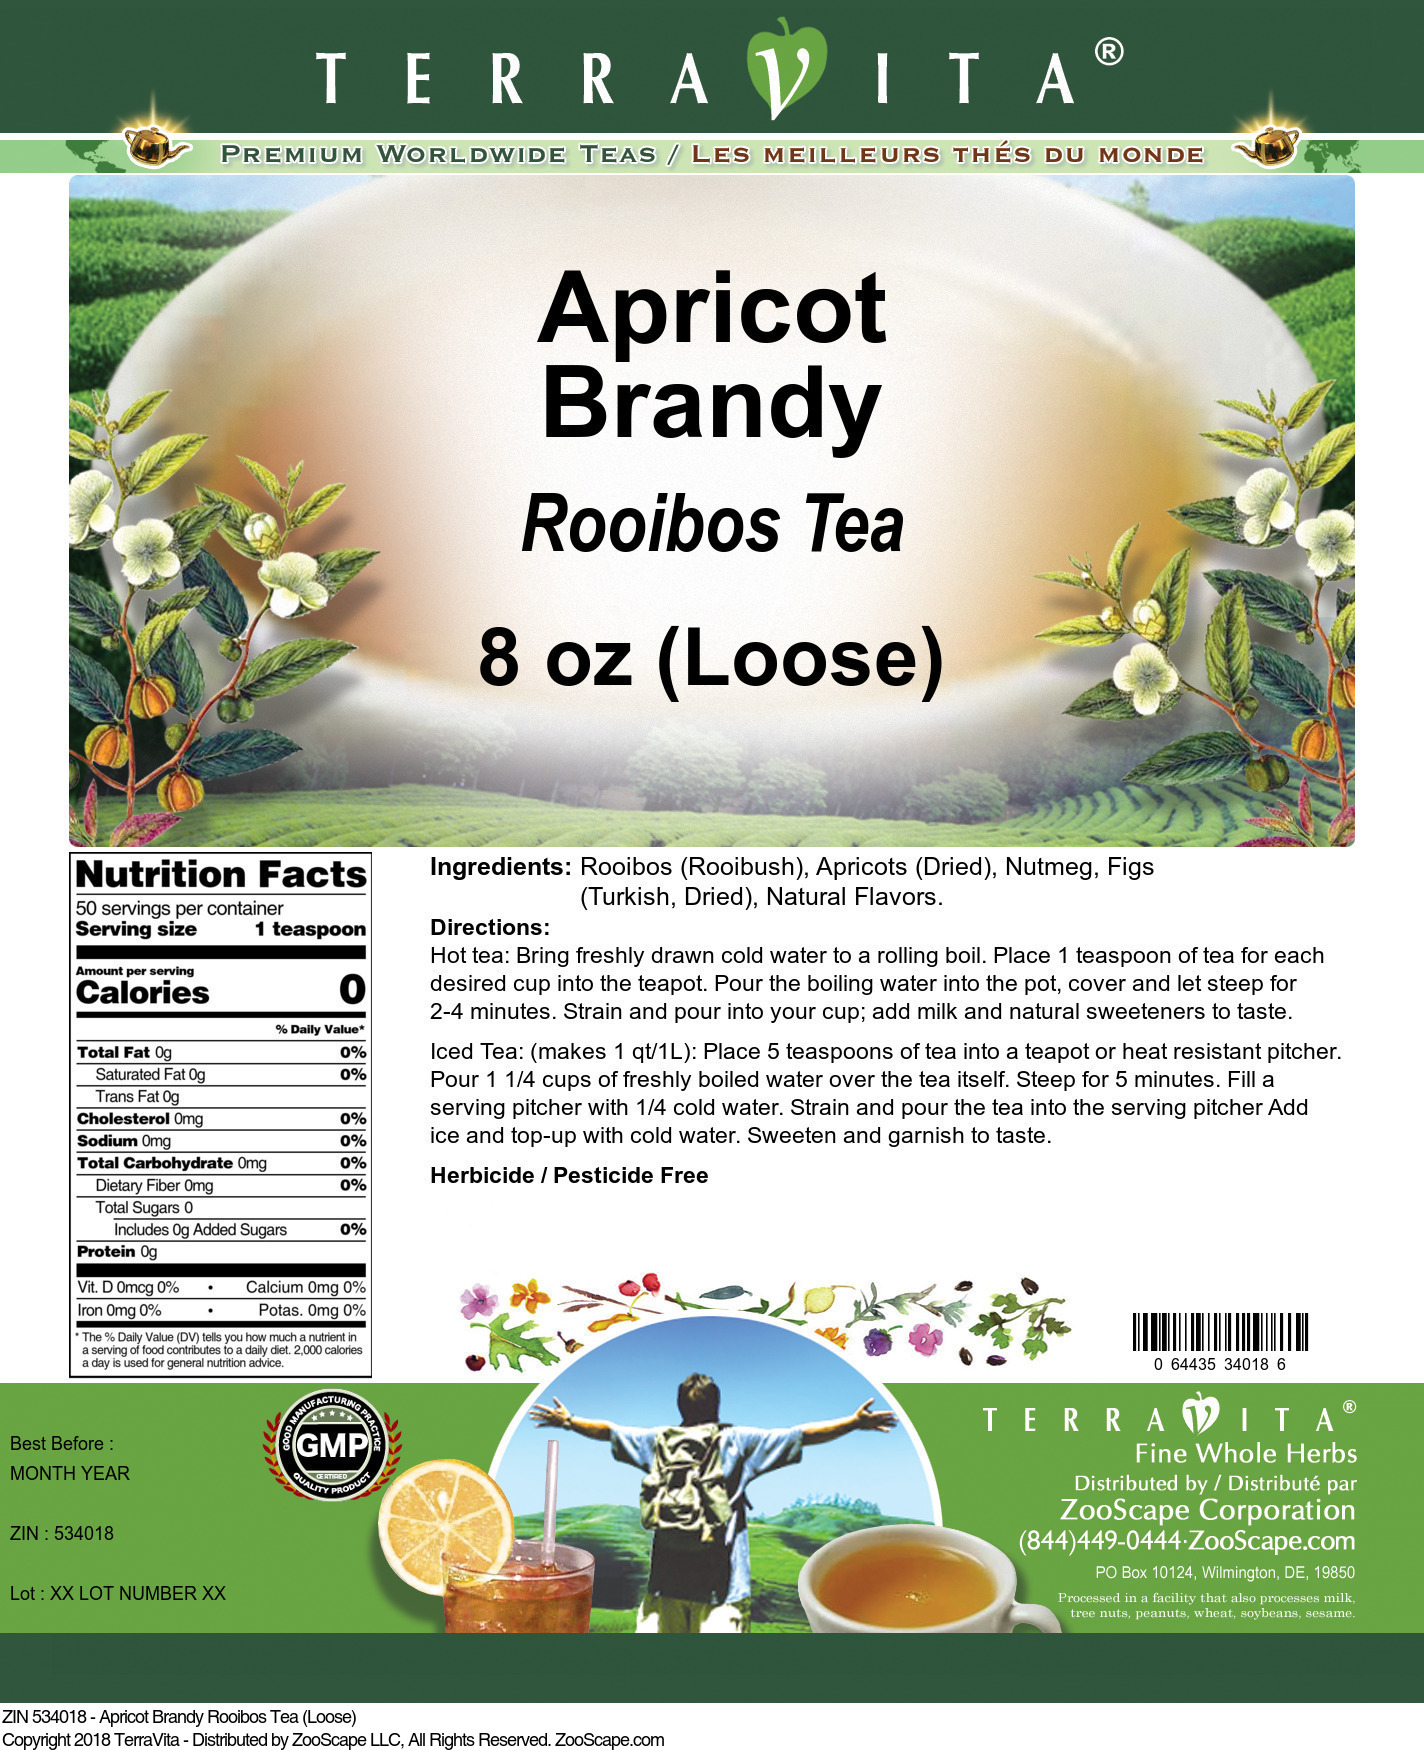 Apricot Brandy Rooibos Tea (Loose) - Label